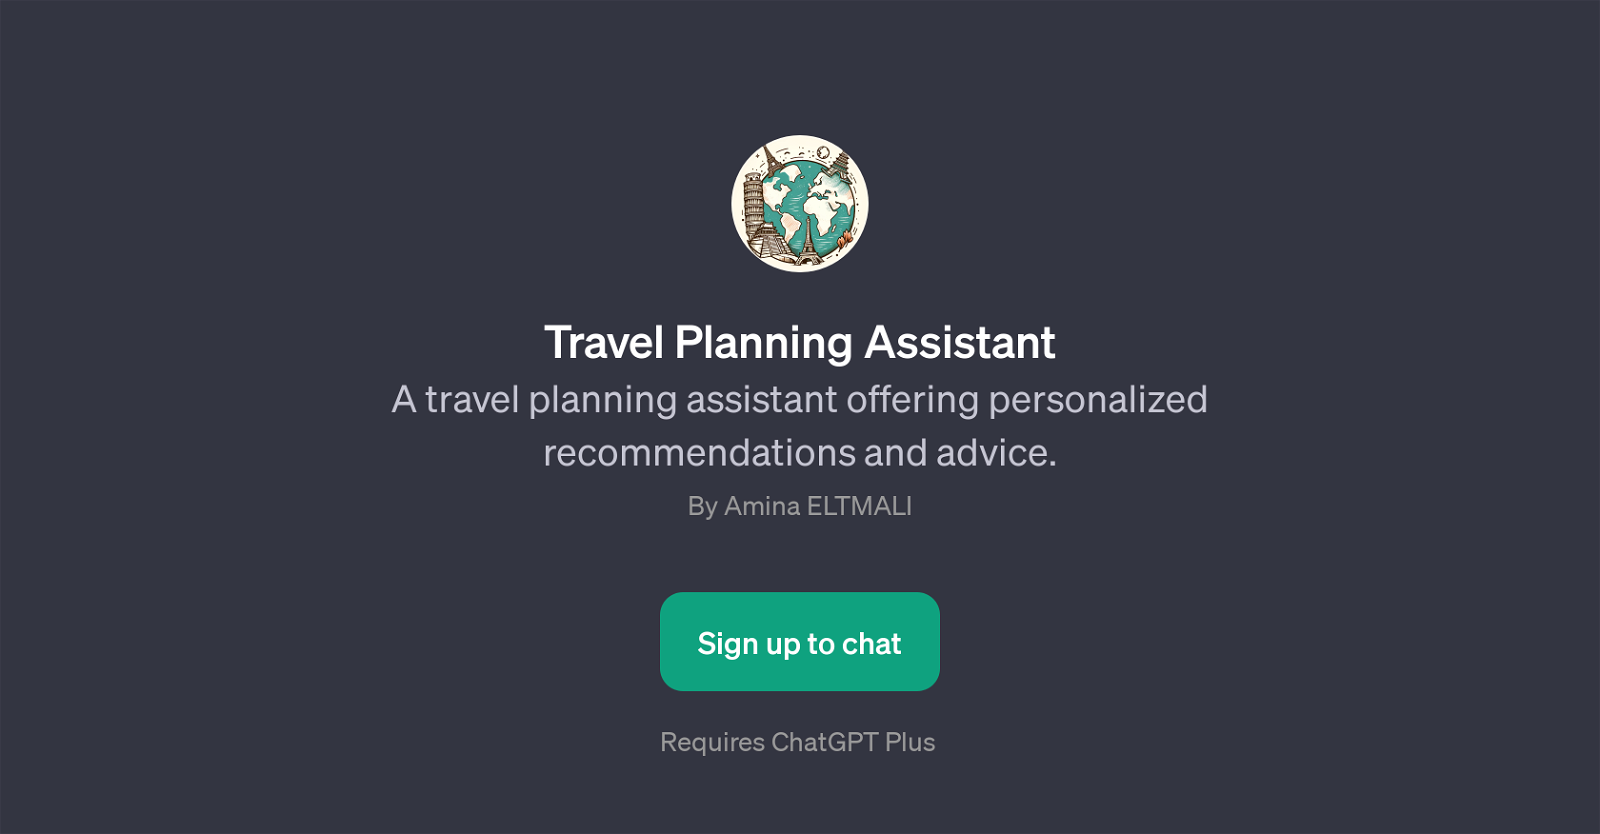 Travel Planning Assistant website